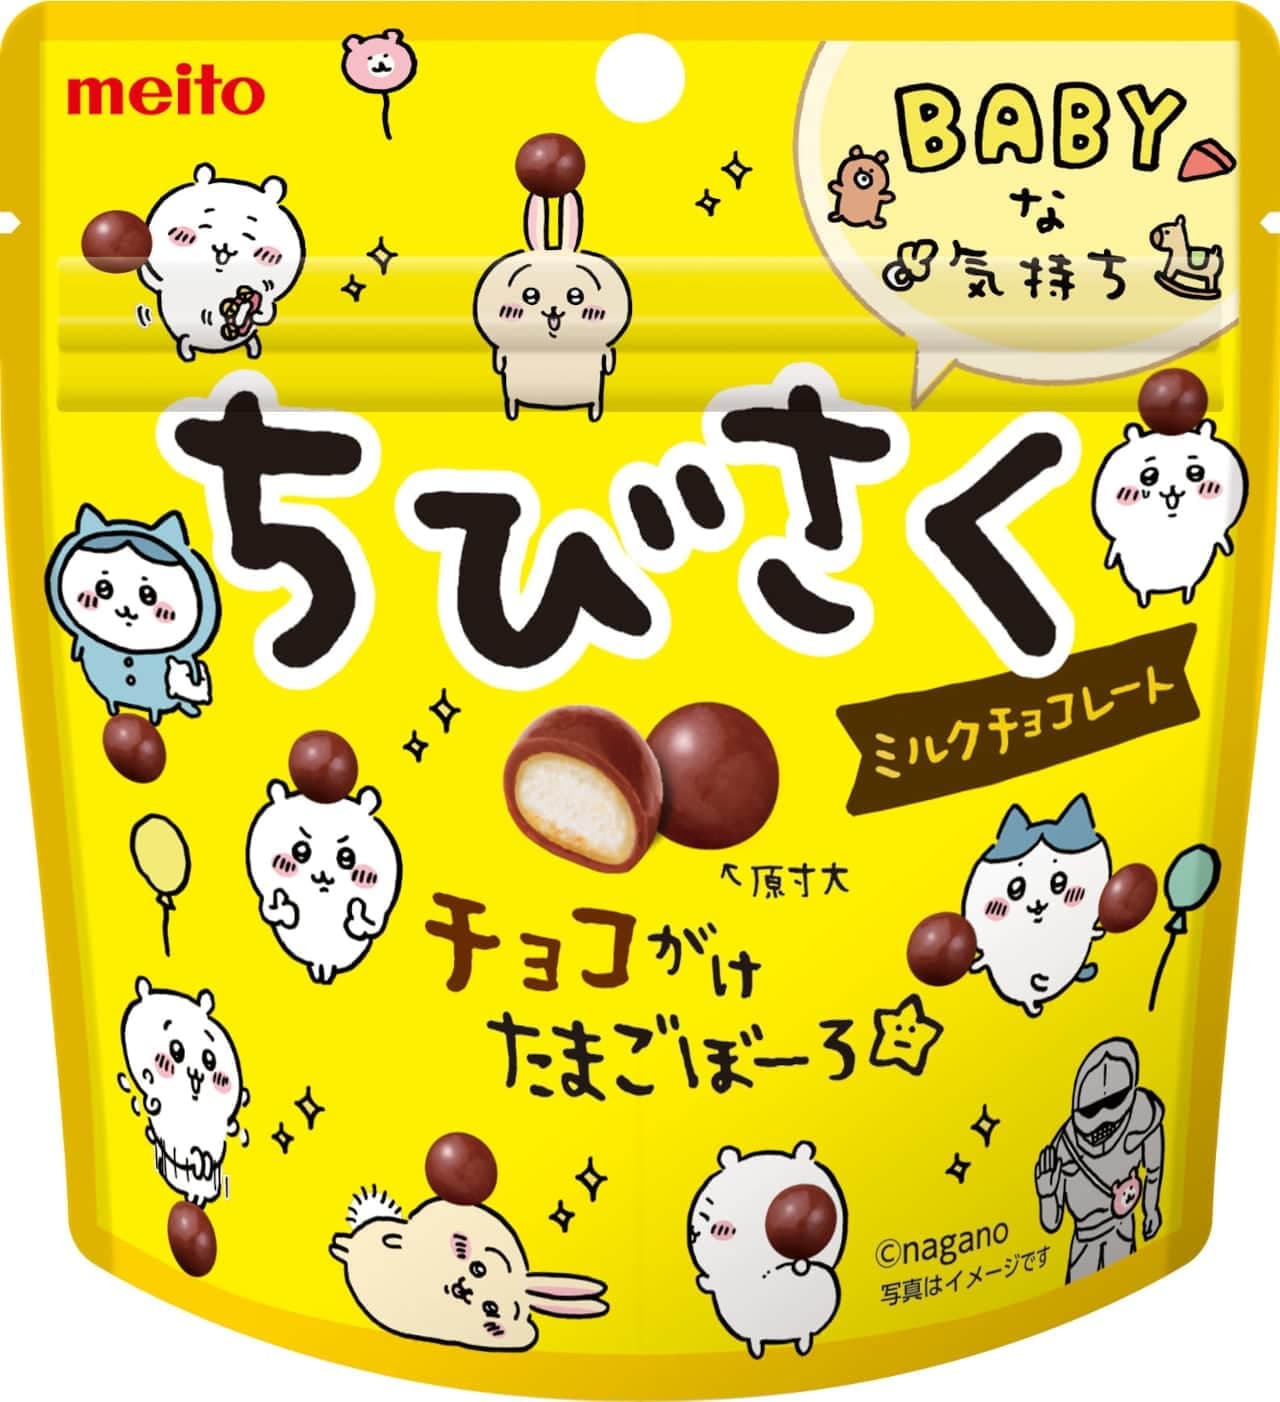 MEITO "Chibisaku Milk Chocolate" "Chibisaku White Chocolate